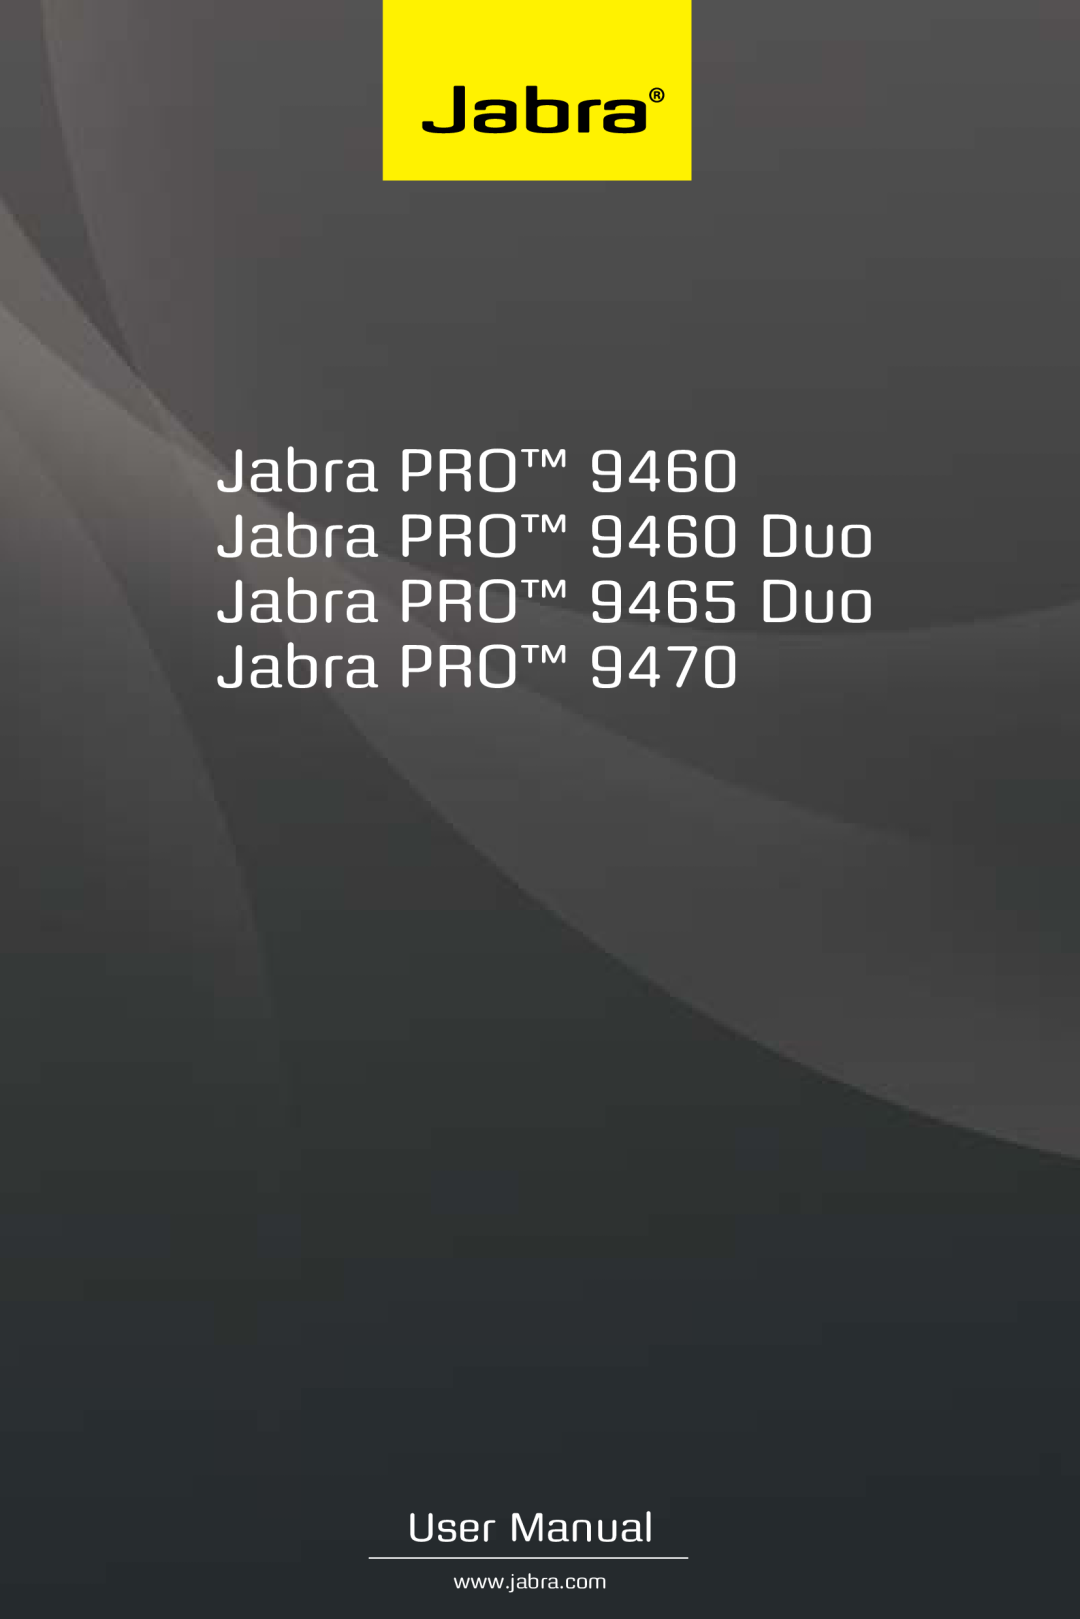 Jabra user manual Jabra PRO Jabra PRO 9460 Duo Jabra PRO 9465 Duo Jabra PRO, User Manual 